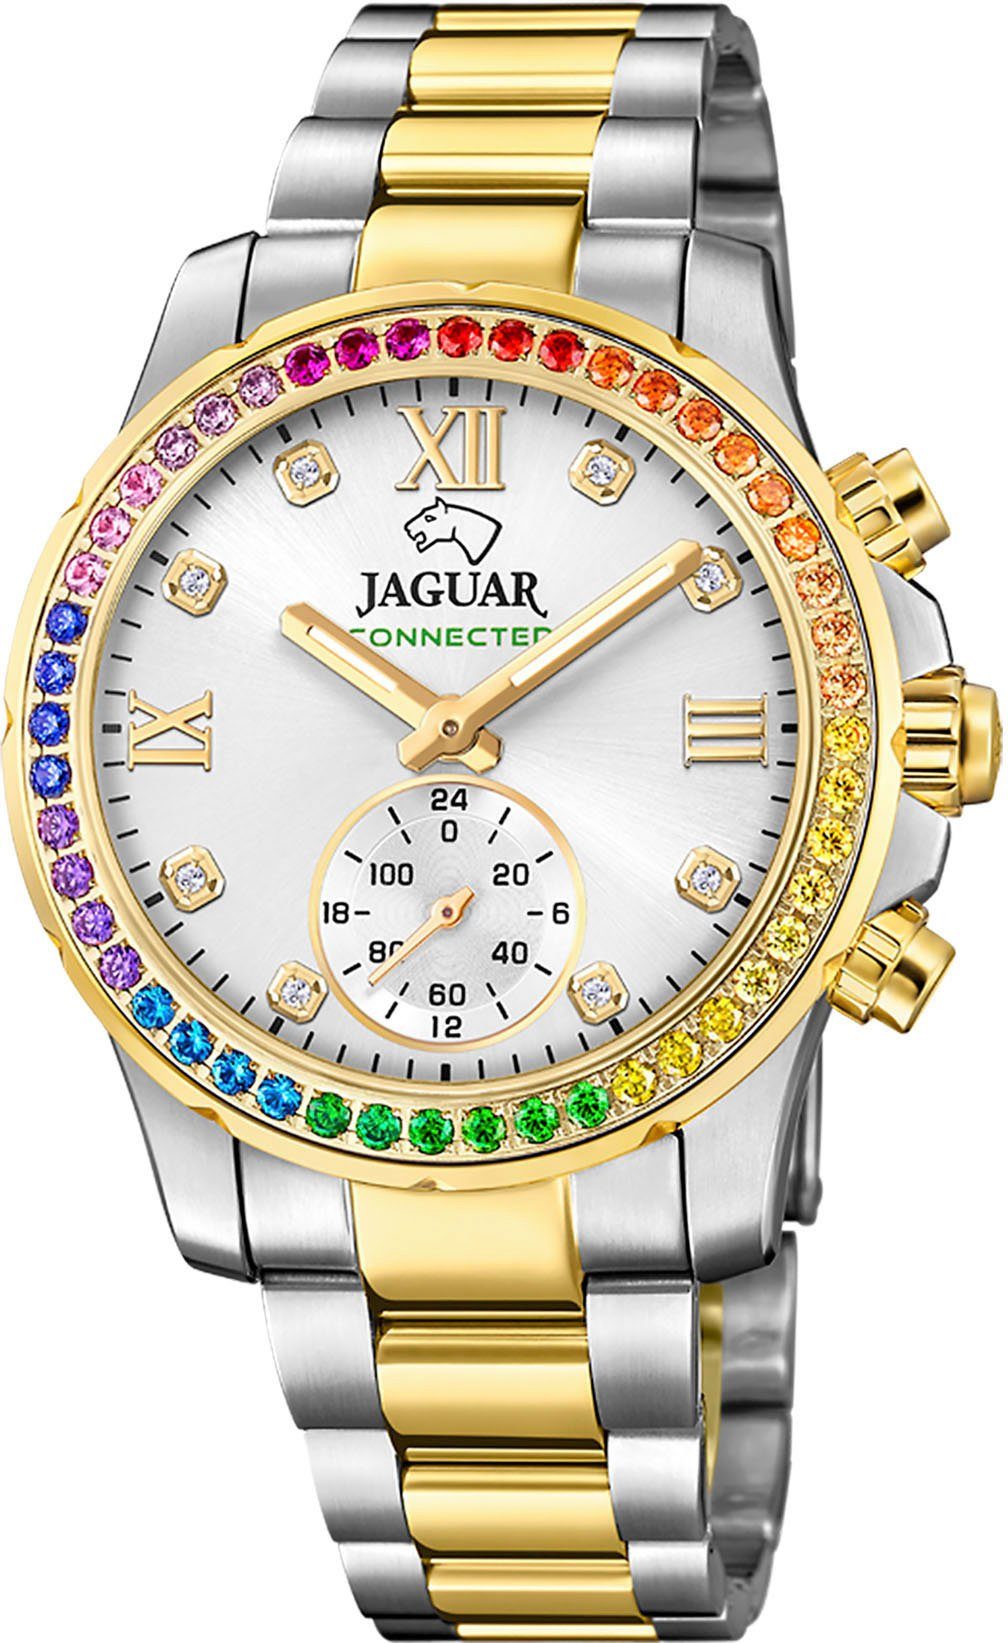 Jaguar Chronograph Connected, J982/4, Armbanduhr, Damenuhr, Saphirglas, Stoppfunktion, Swiss Made